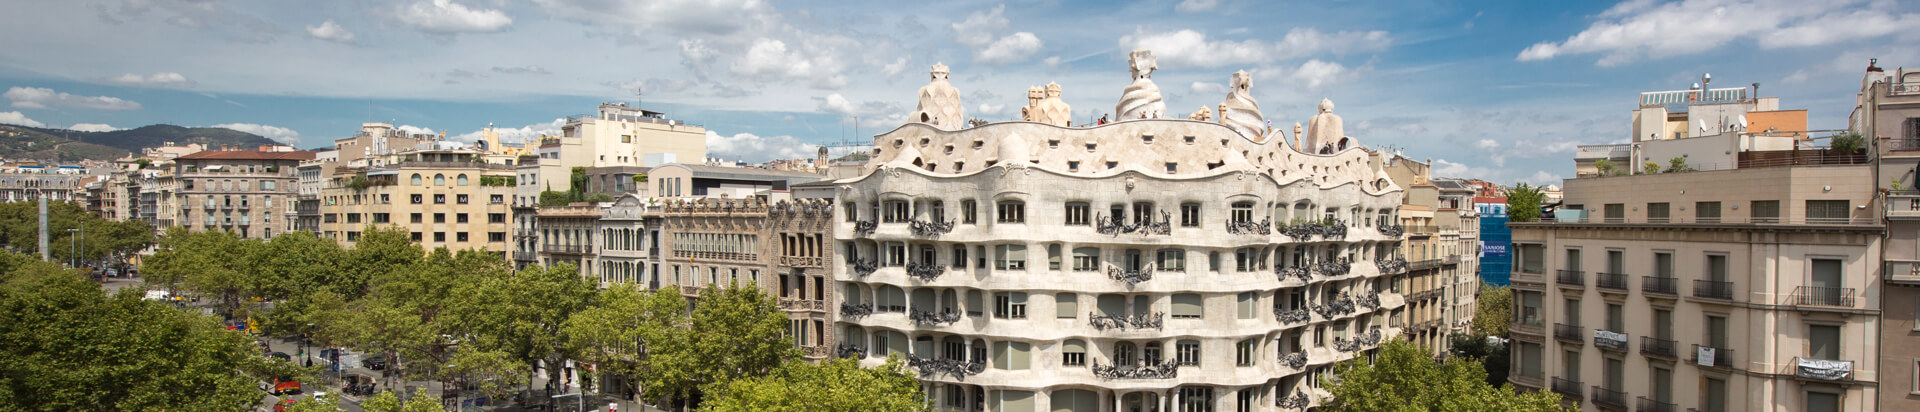 casa mila gaudi modernisme barcelone